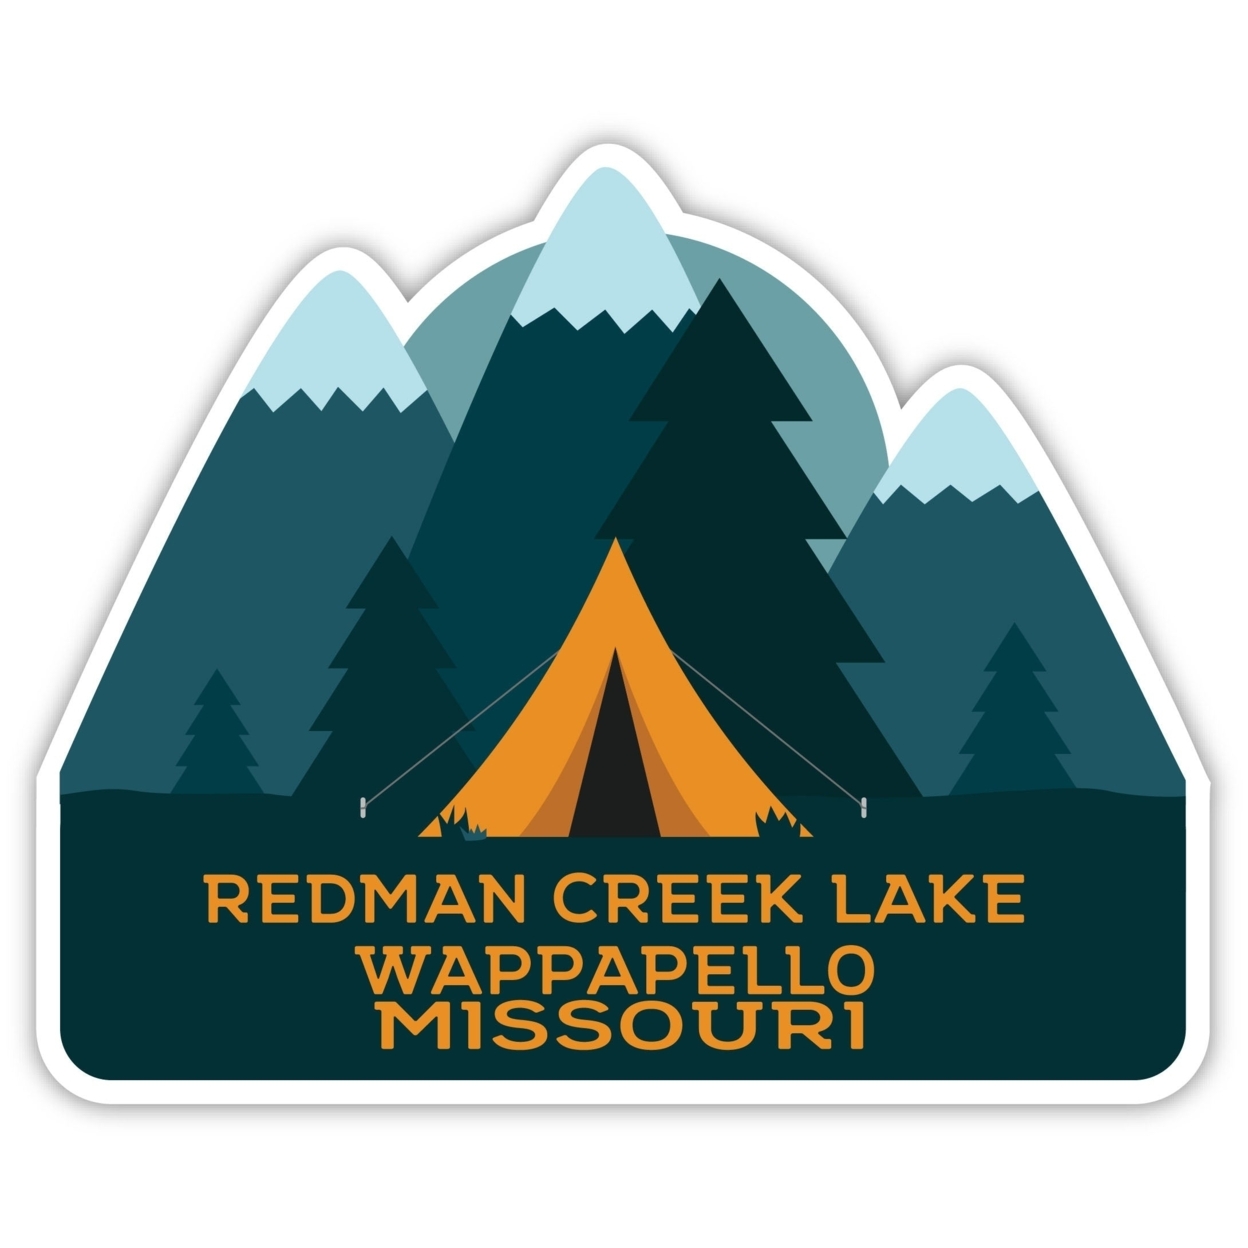 Redman Creek Lake Wappapello Missouri Souvenir Decorative Stickers (Choose Theme And Size) - Single Unit, 4-Inch, Tent